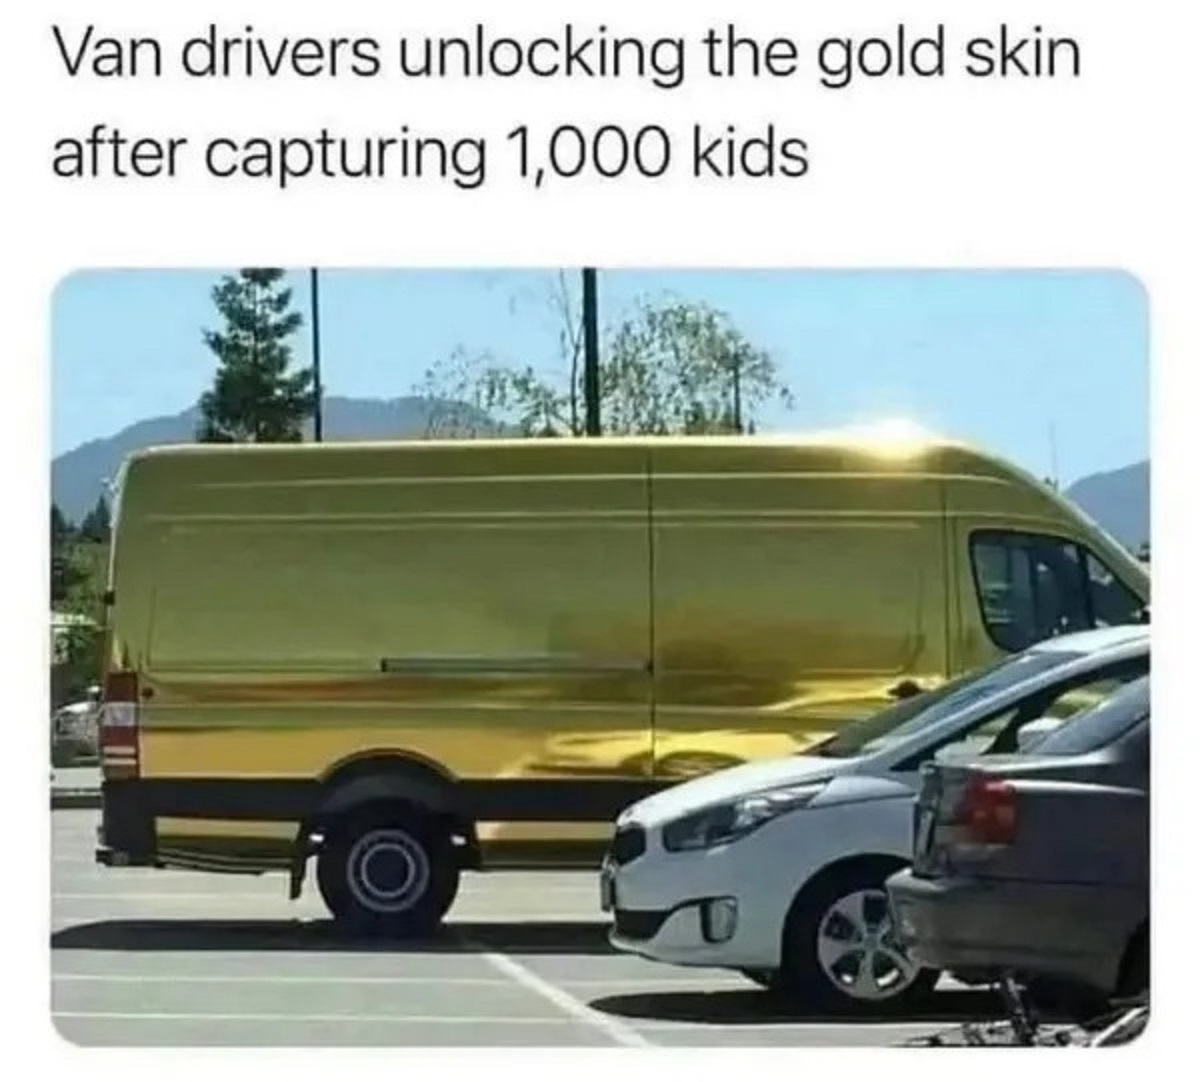 van driver golden skin - Van drivers unlocking the gold skin after capturing 1,000 kids